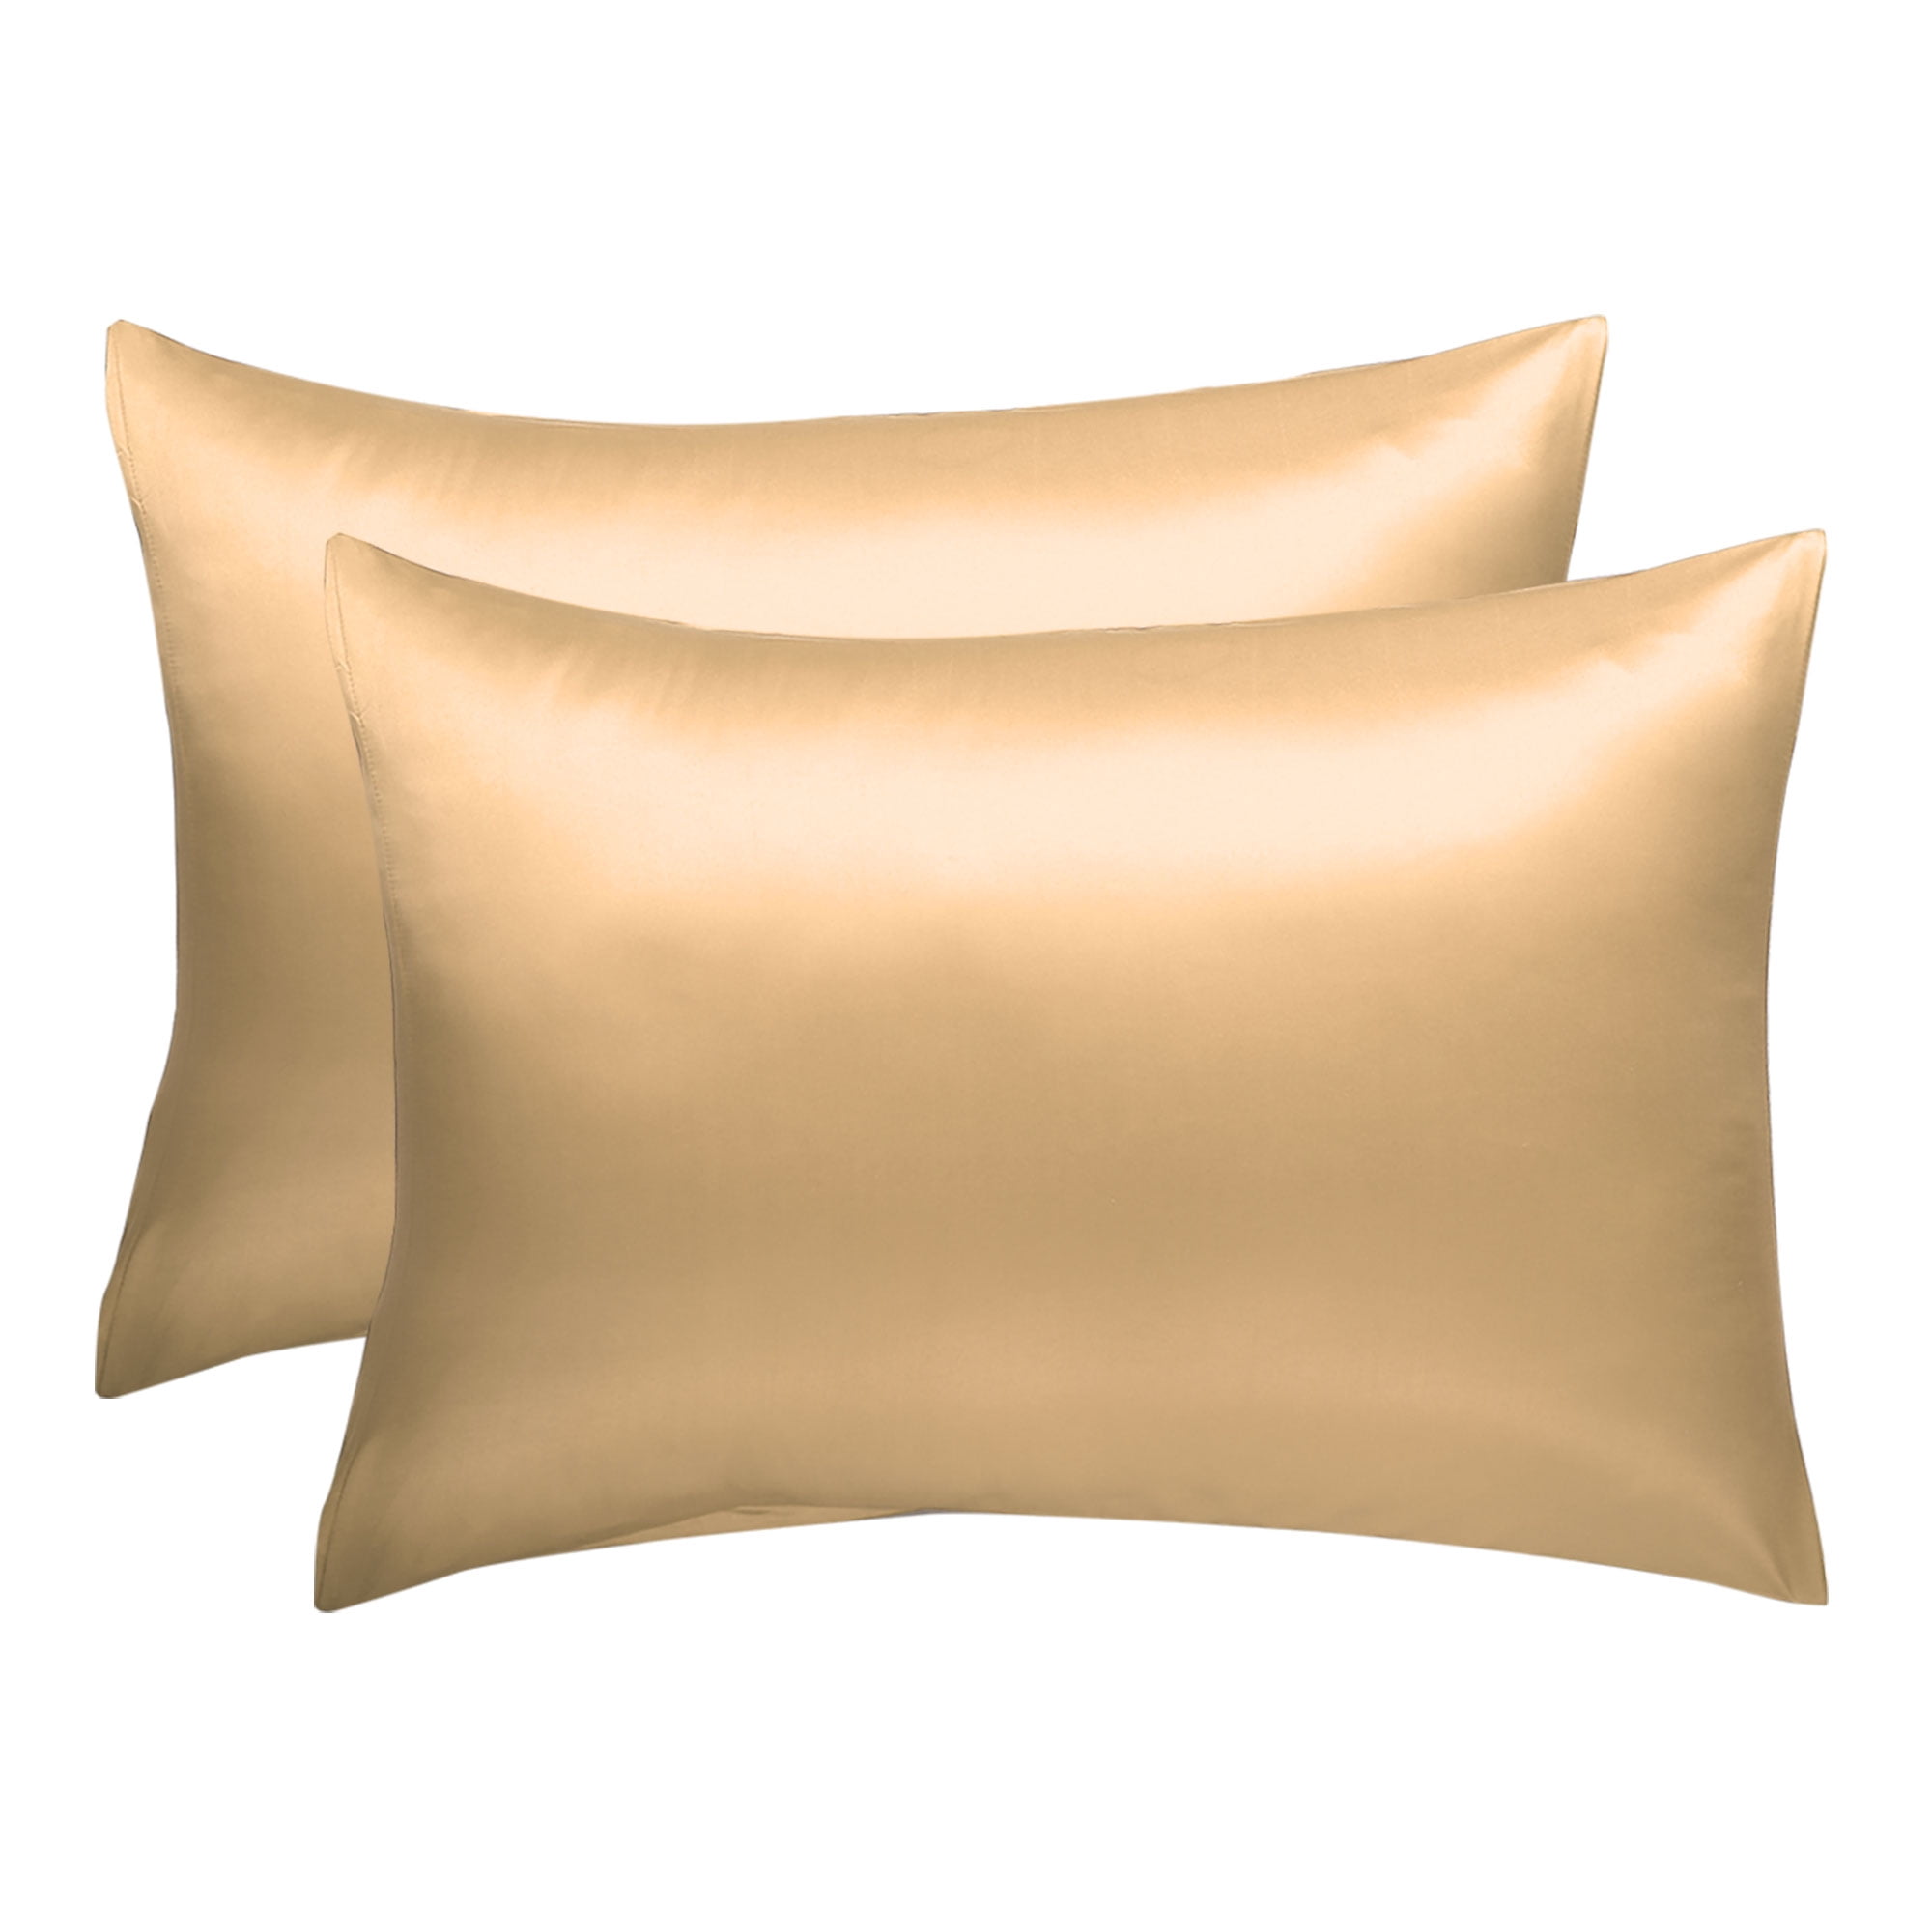 Details about   1800 Series Pillow Case Cover Set Satin Silk Pillowcase Set of 2 Pillowcases HOT 